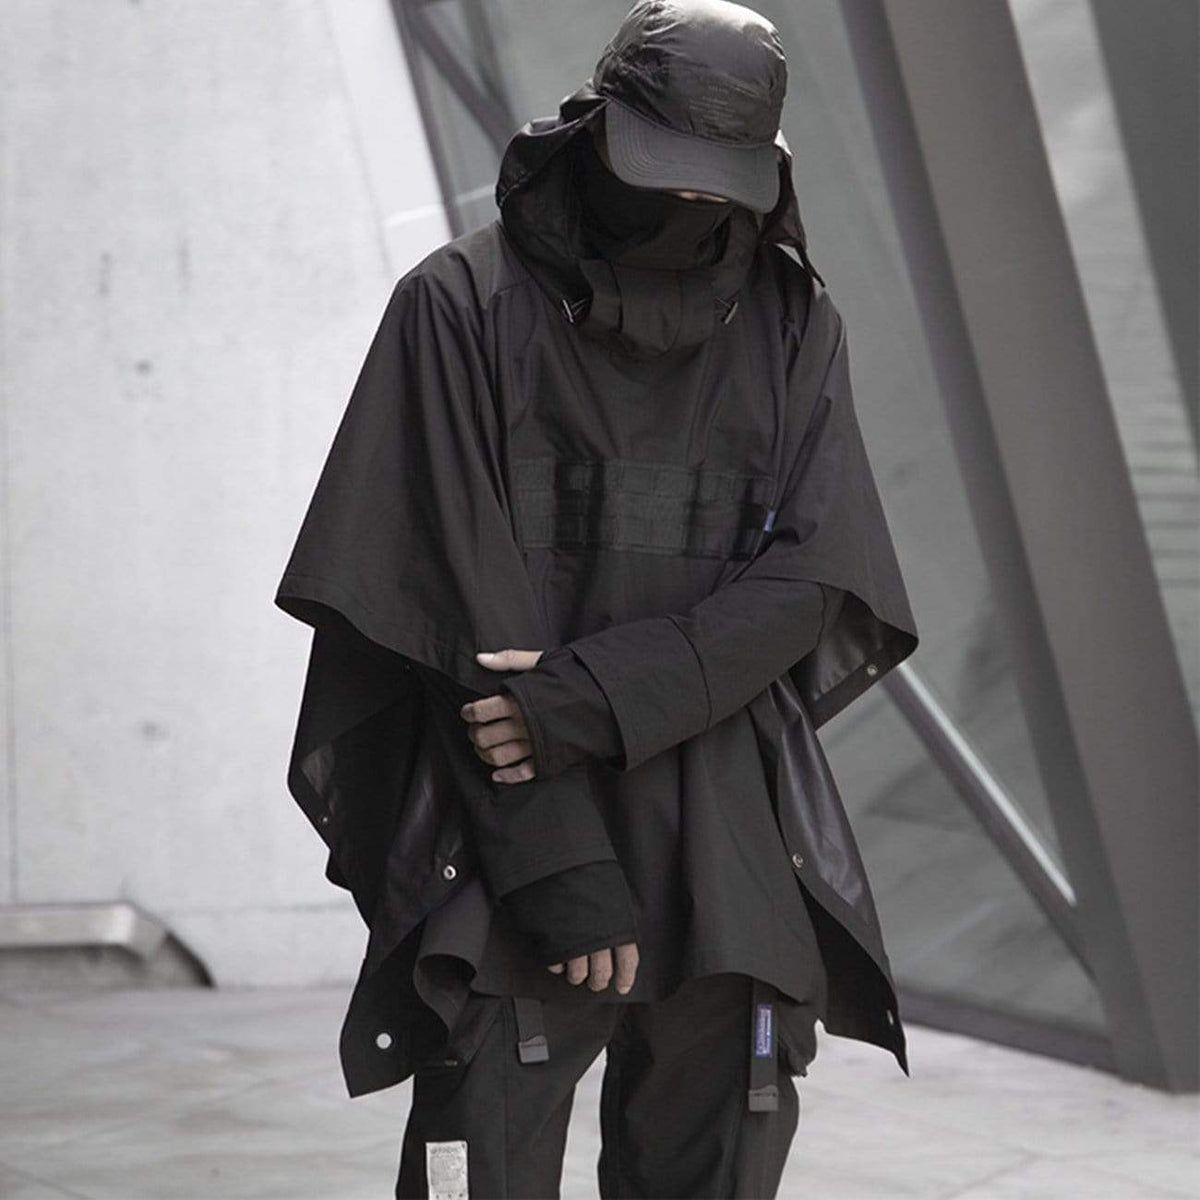 Ninja Techwear Cape | Cyberpunk Fashion Cape – Yugen Theory